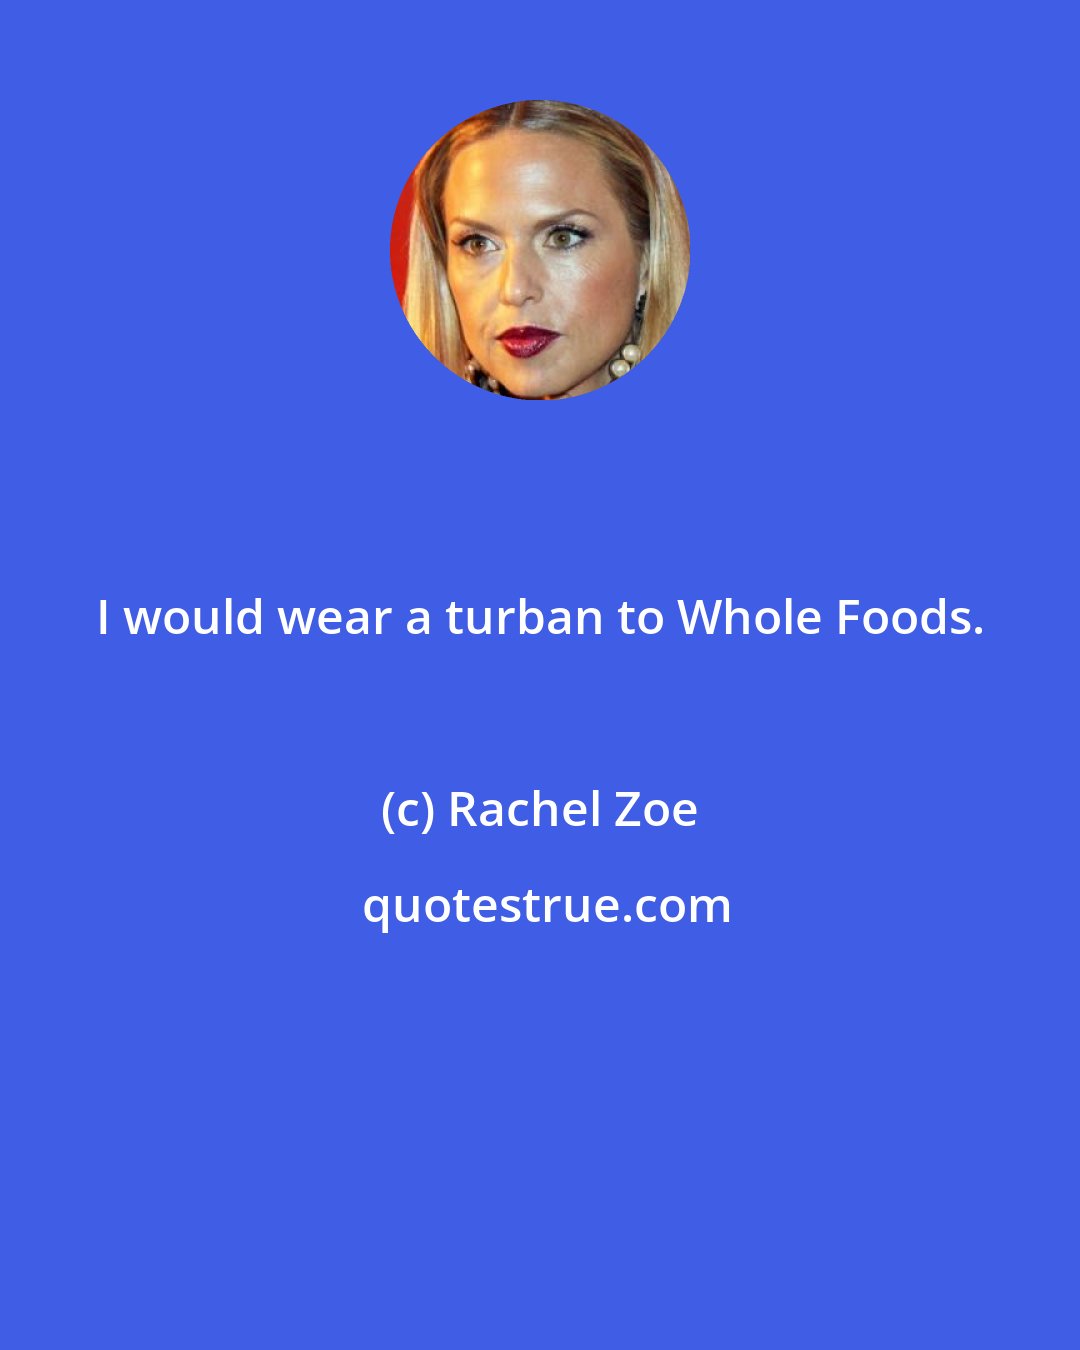 Rachel Zoe: I would wear a turban to Whole Foods.